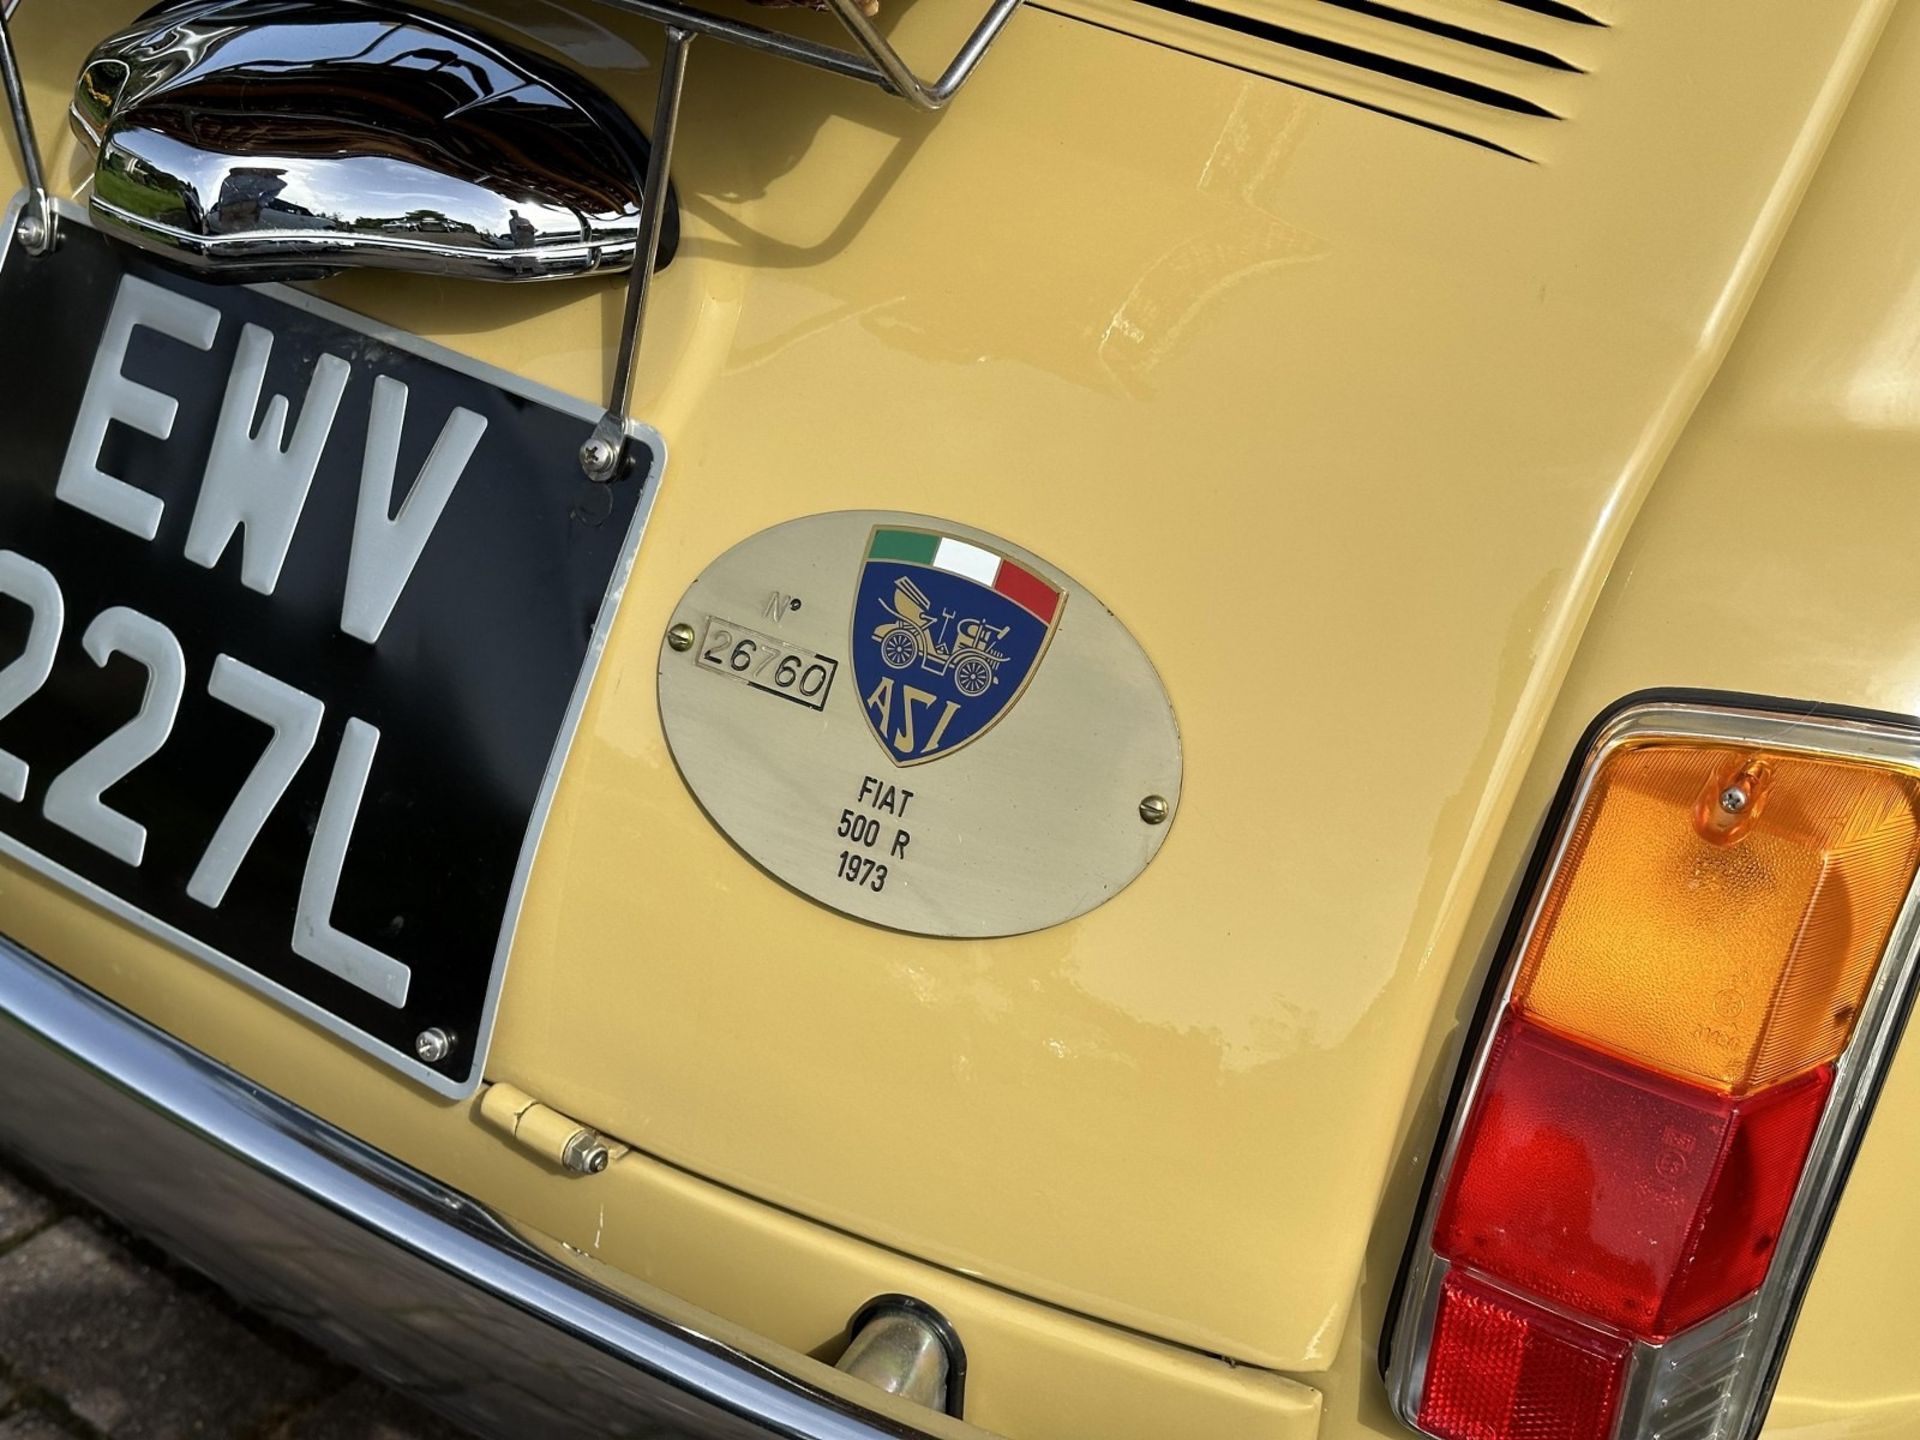 1973 Fiat 500F Registration number EWV 227L Chassis number 110F5125653 Engine number 126A5000 - Image 16 of 51